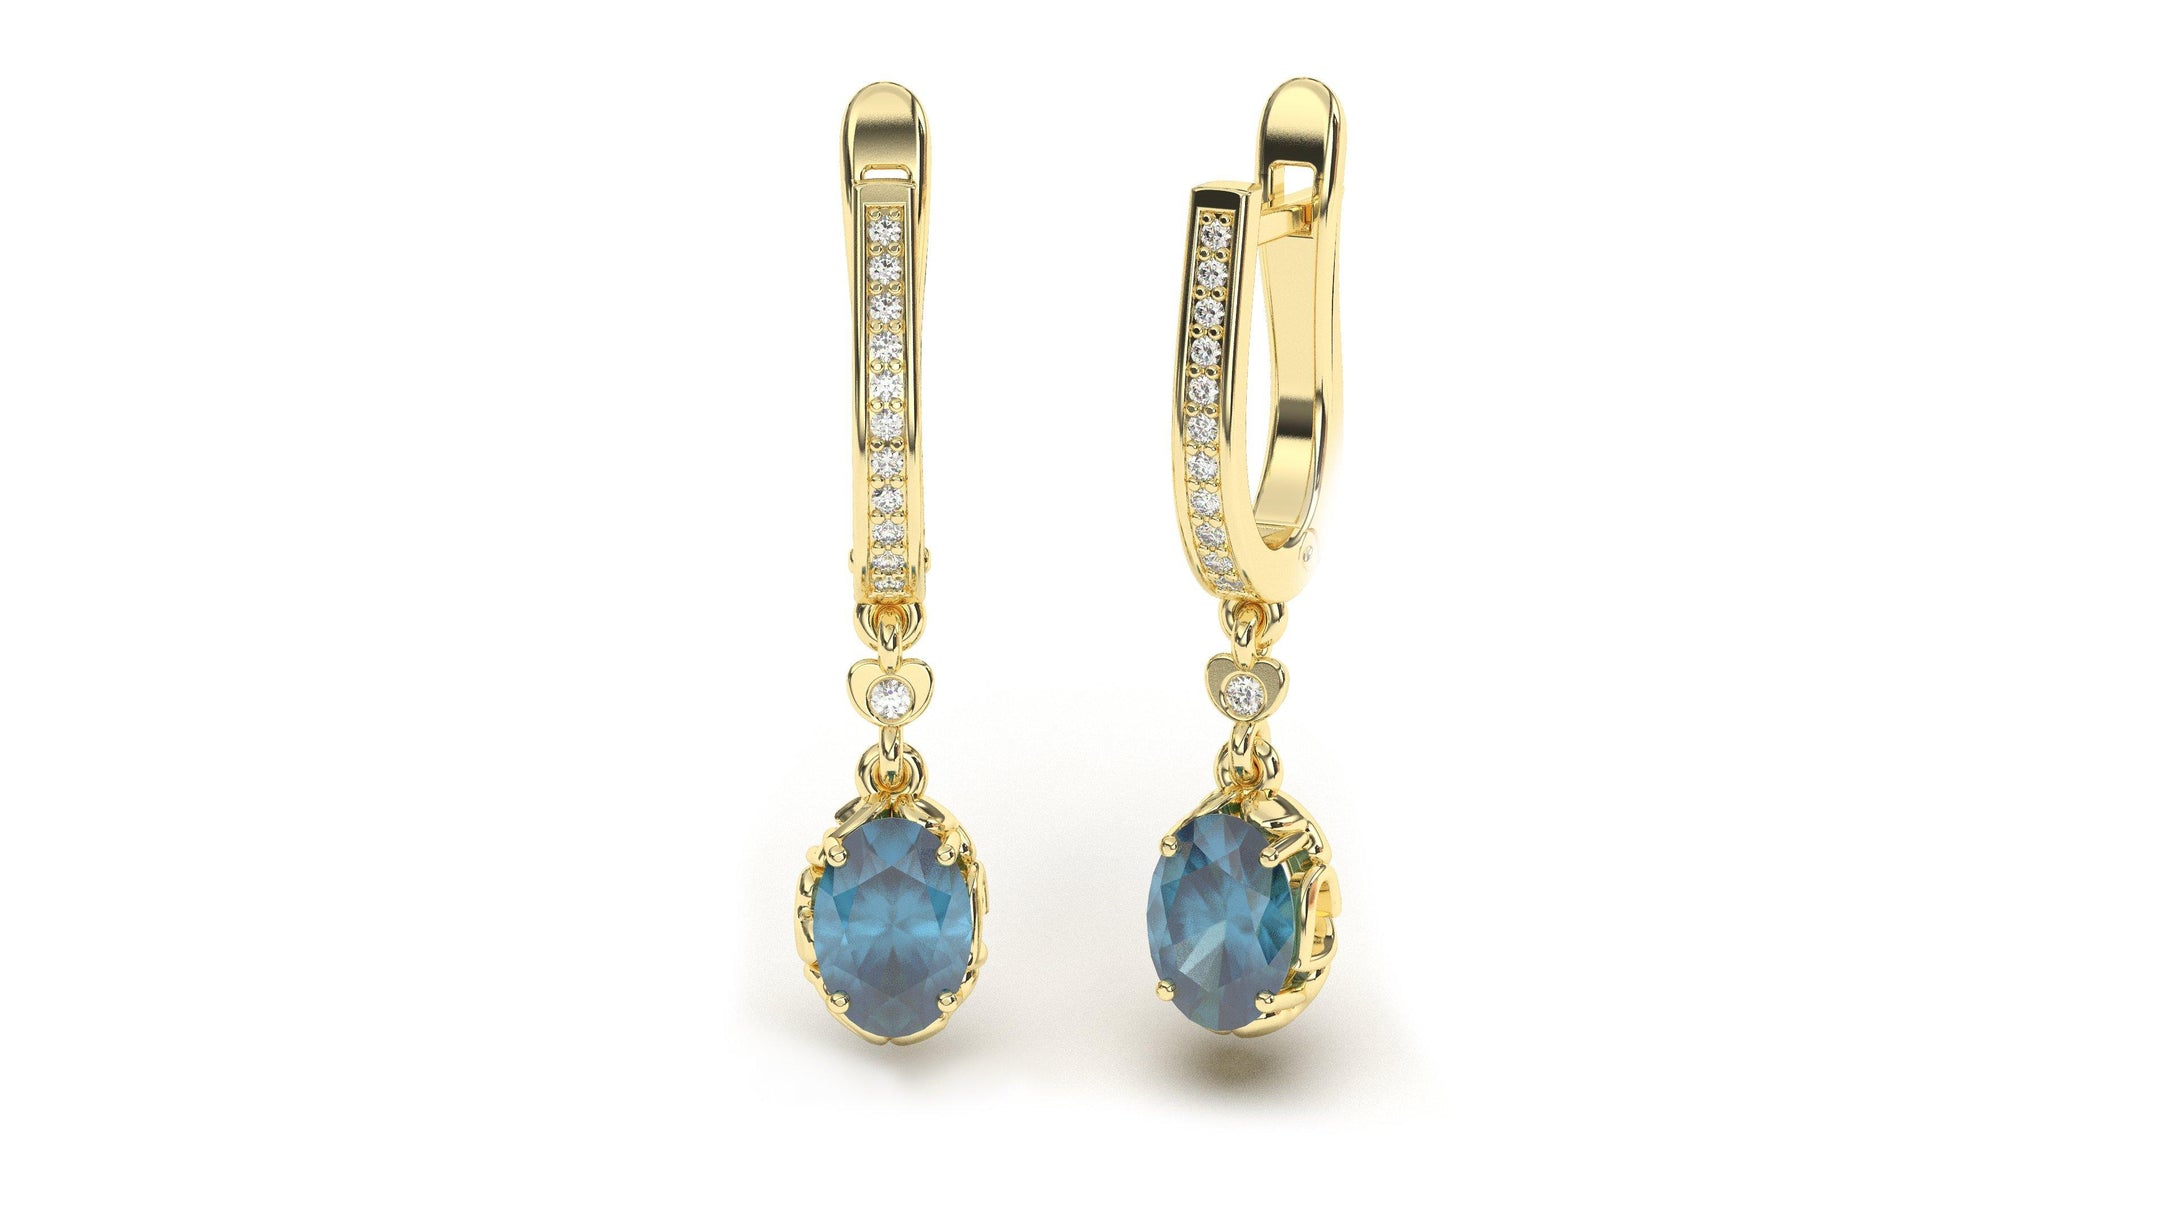 DIVINA Classic: Contours VII Earrings - Divina Jewelry